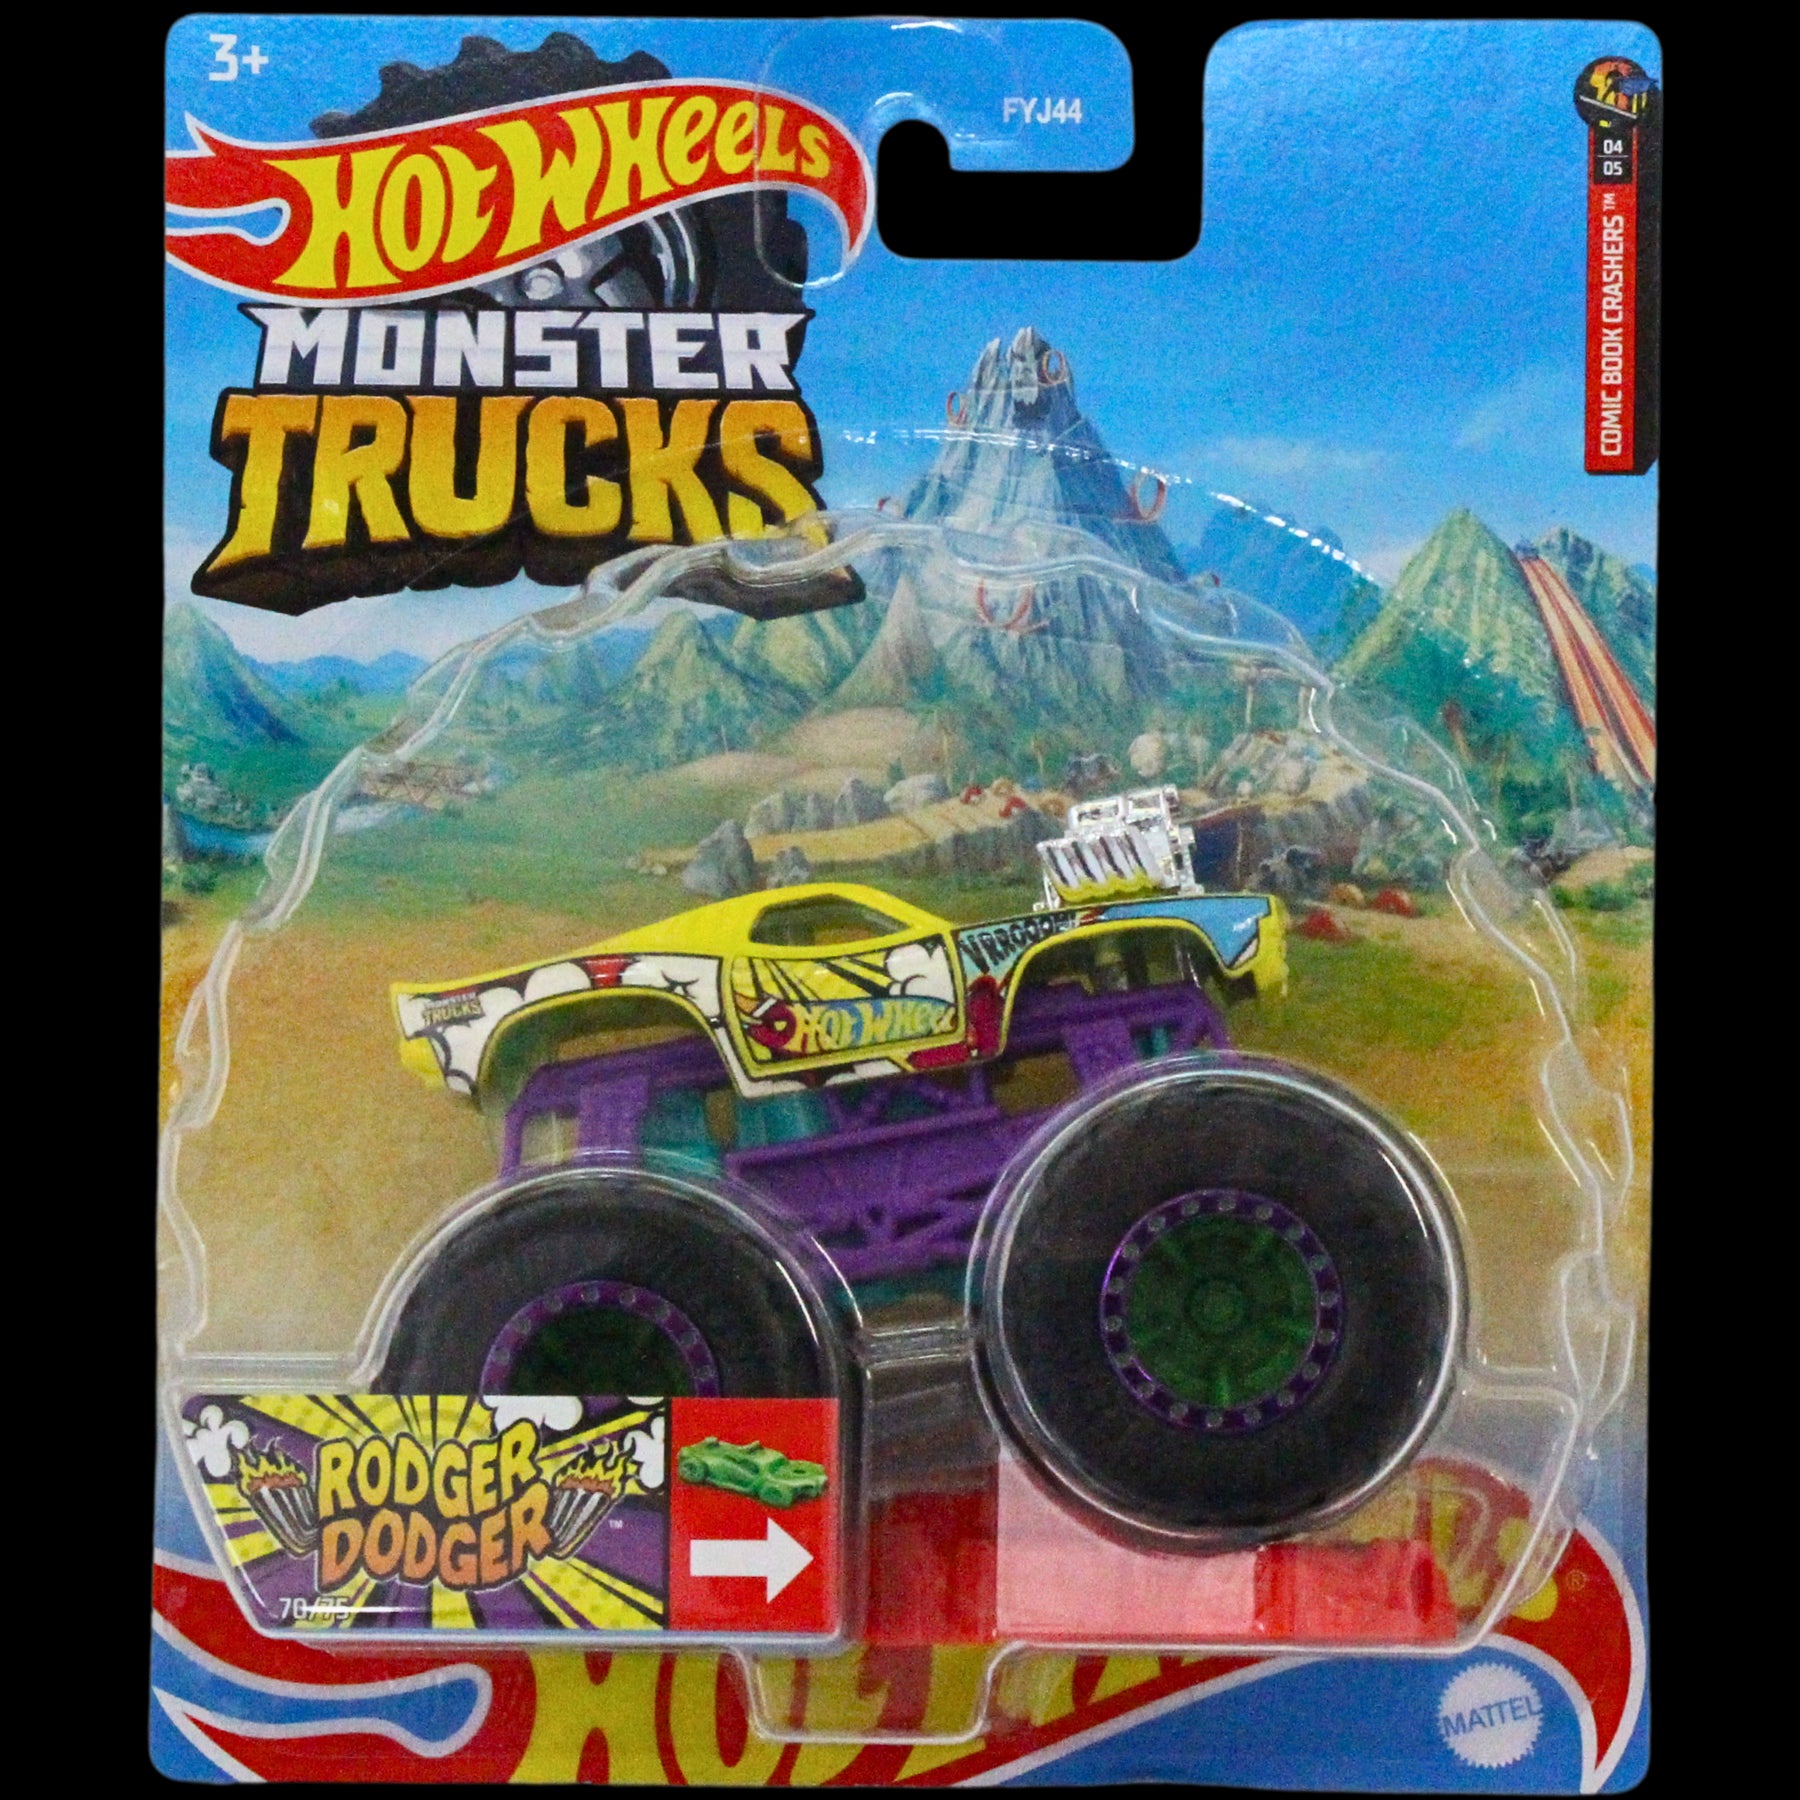 Hot Wheels Monster Trucks - 1:64 Scale Diecast - Rodger Dodger & Buzz Lightyear - Twin Pack - Toptoys2u